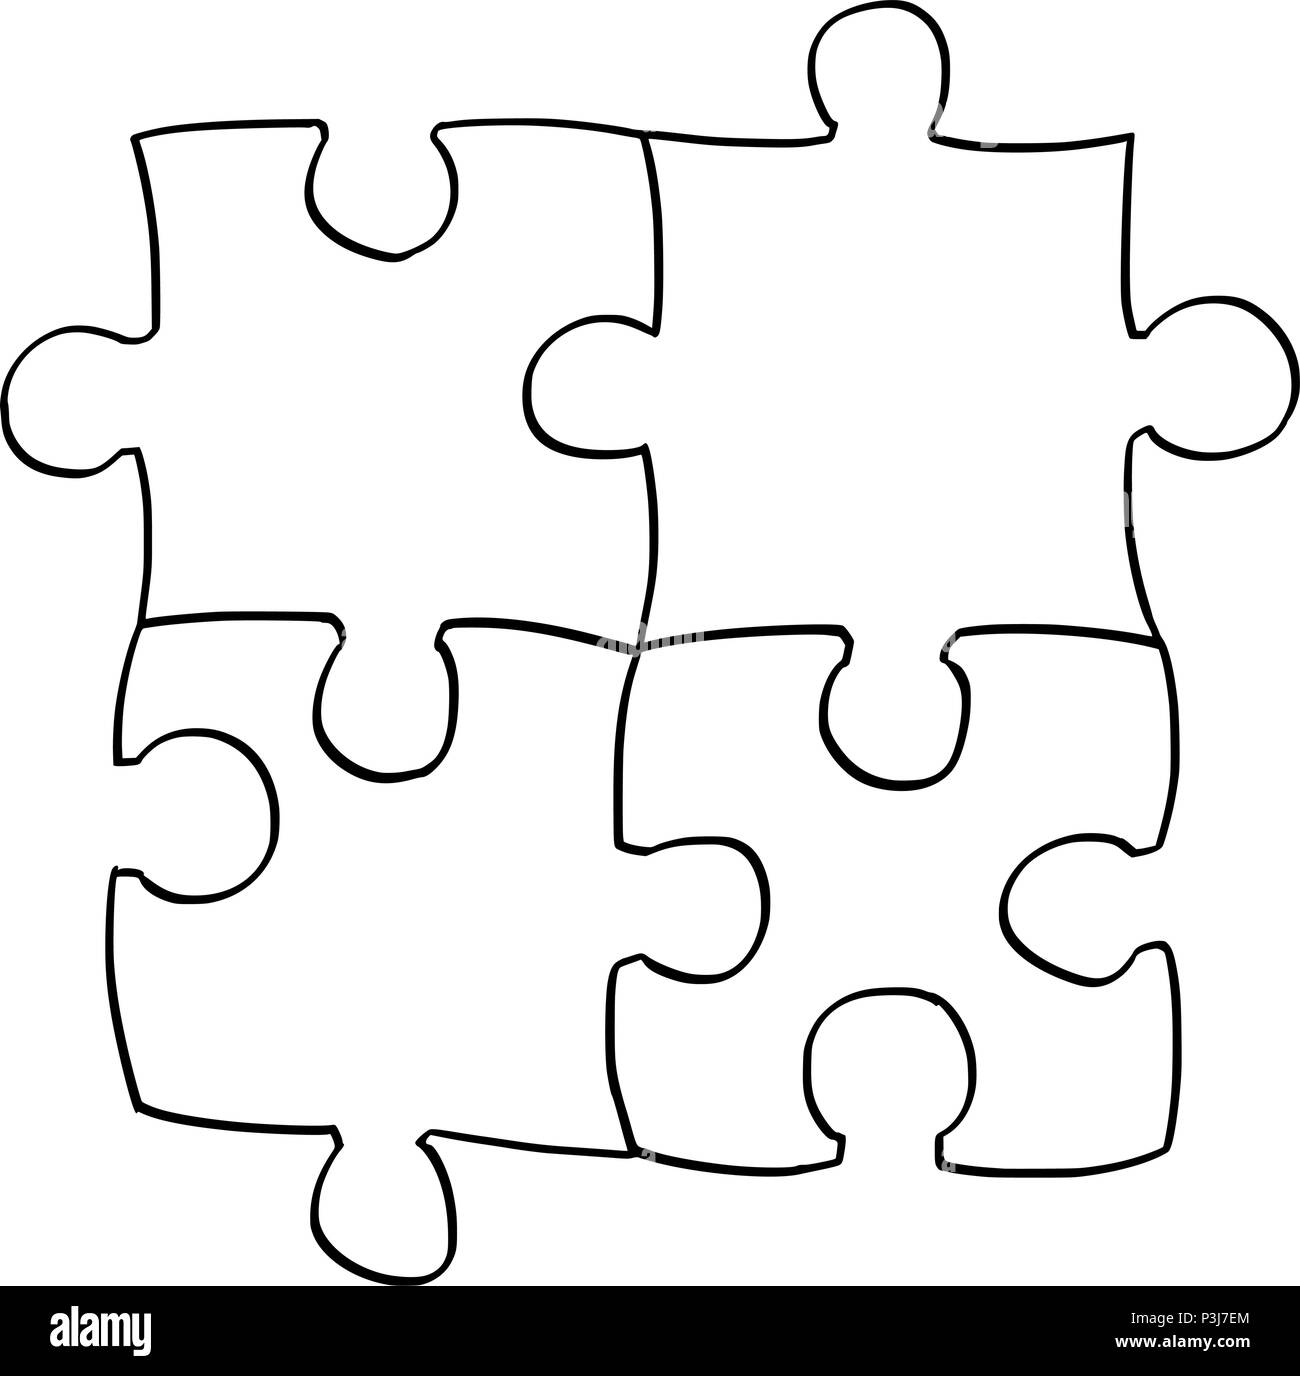 Arthur Conan Doyle hardware Oblongo Black white jigsaw puzzle outline Imágenes de stock en blanco y negro -  Alamy